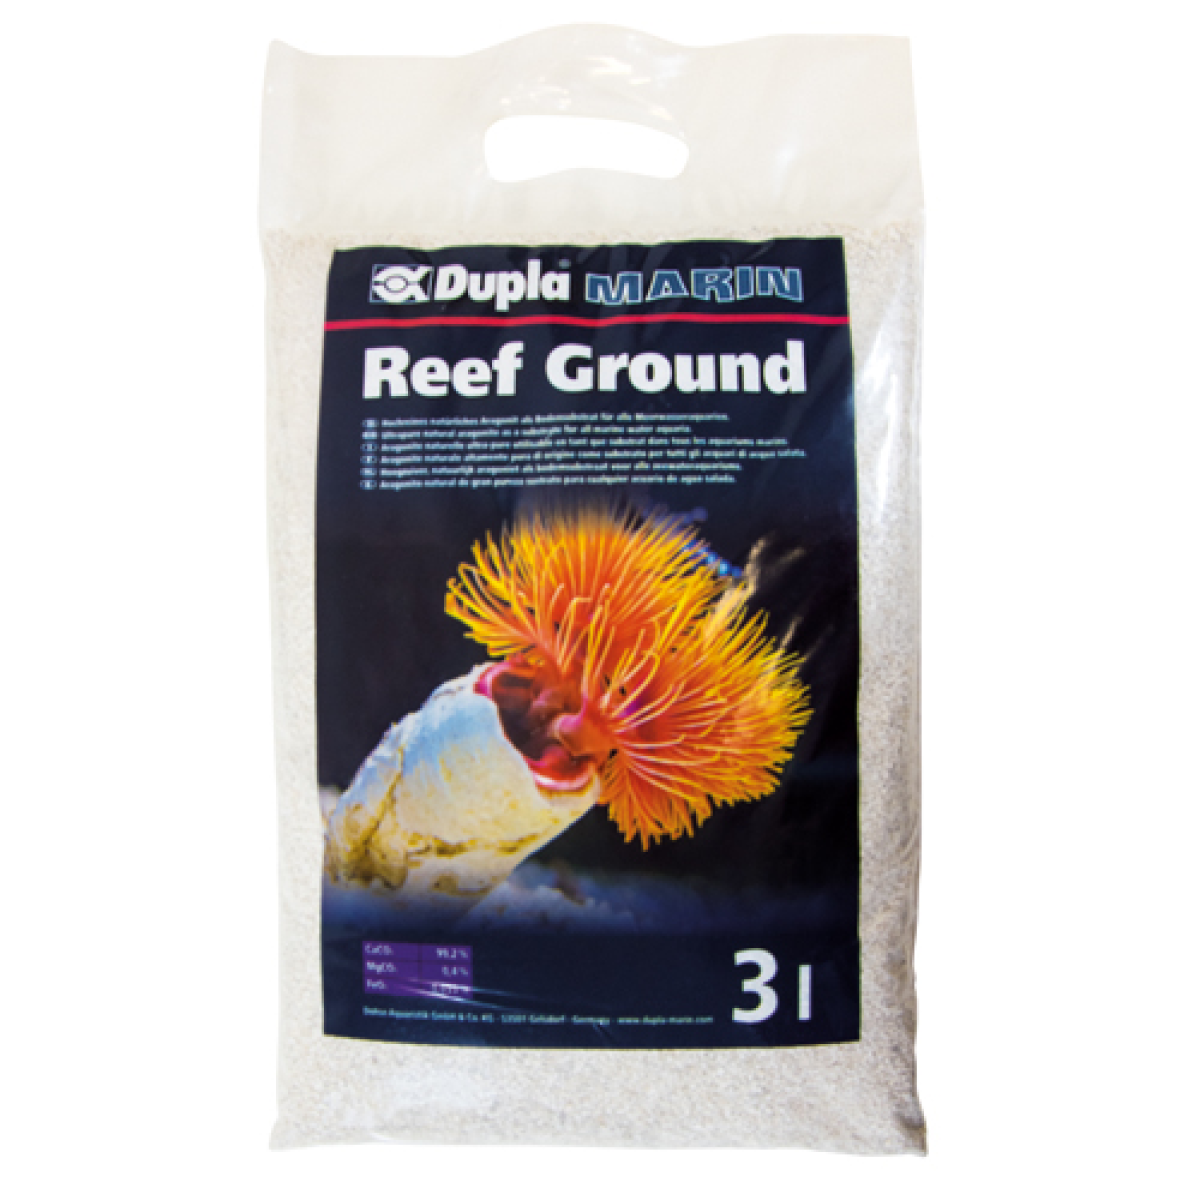 Reef Ground Sand 0.5 - 1.2 mm dia.